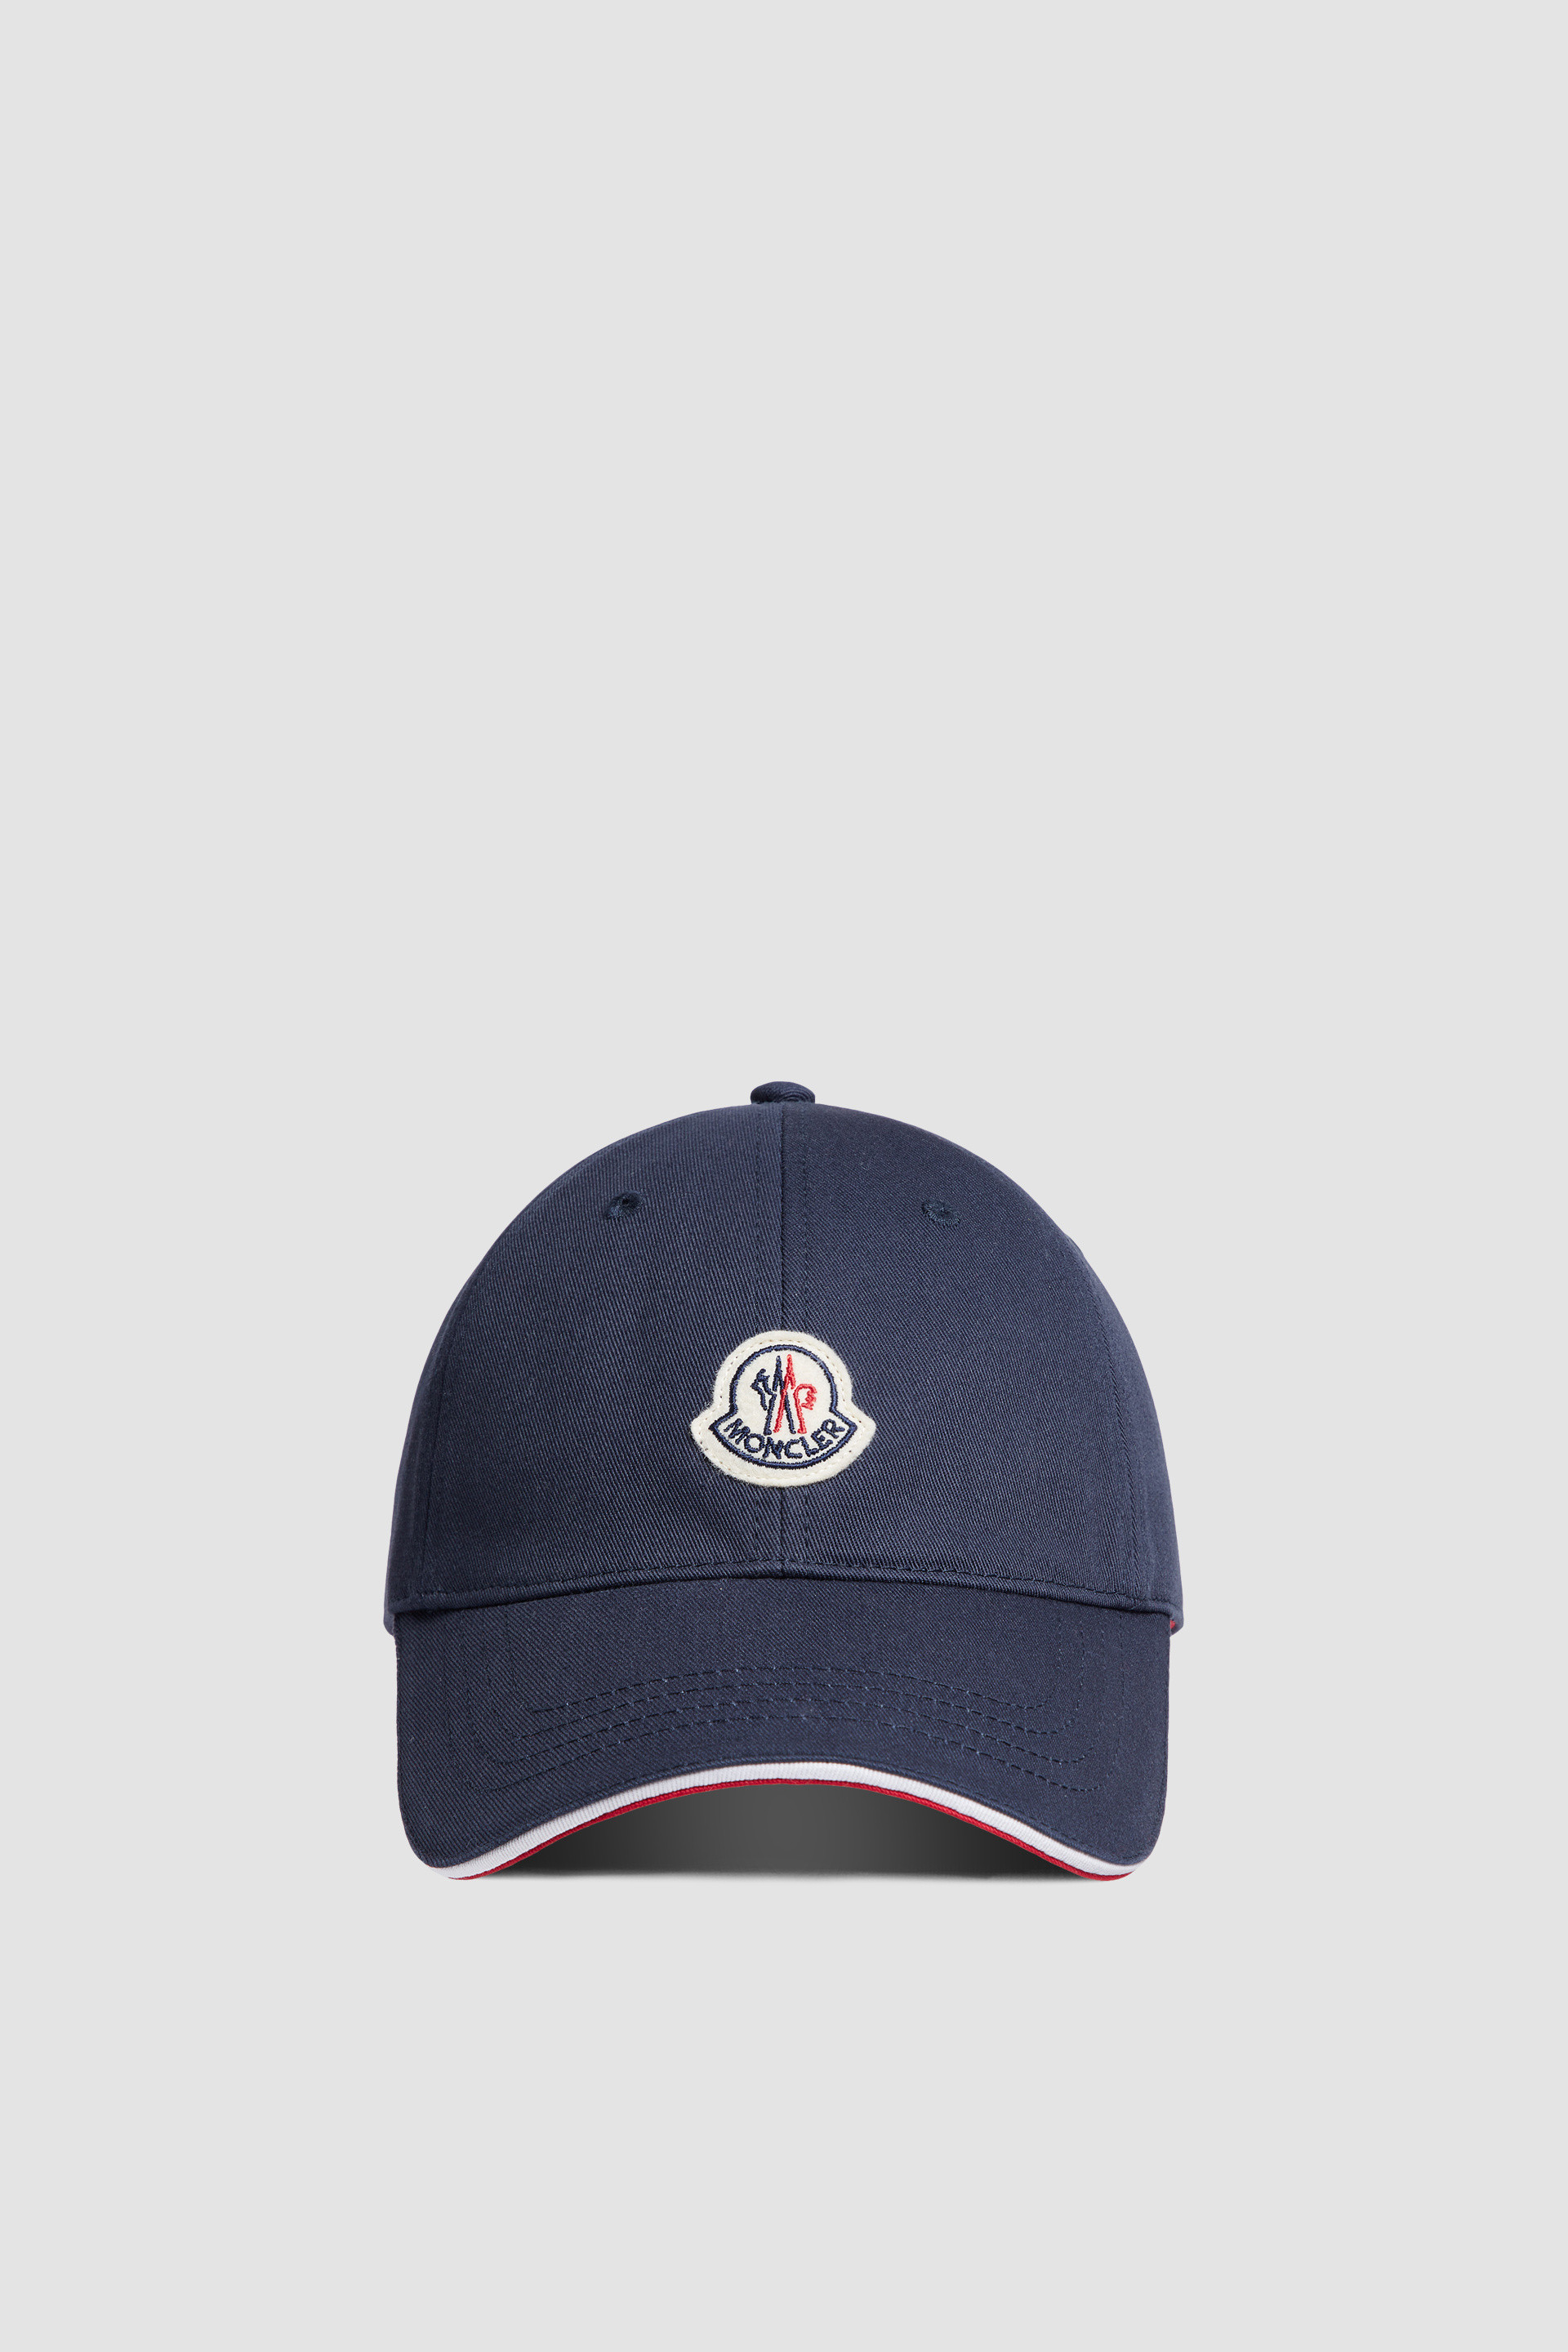 Moncler Men's Logo Baseball Cap - Blue - Size One Size - Navy